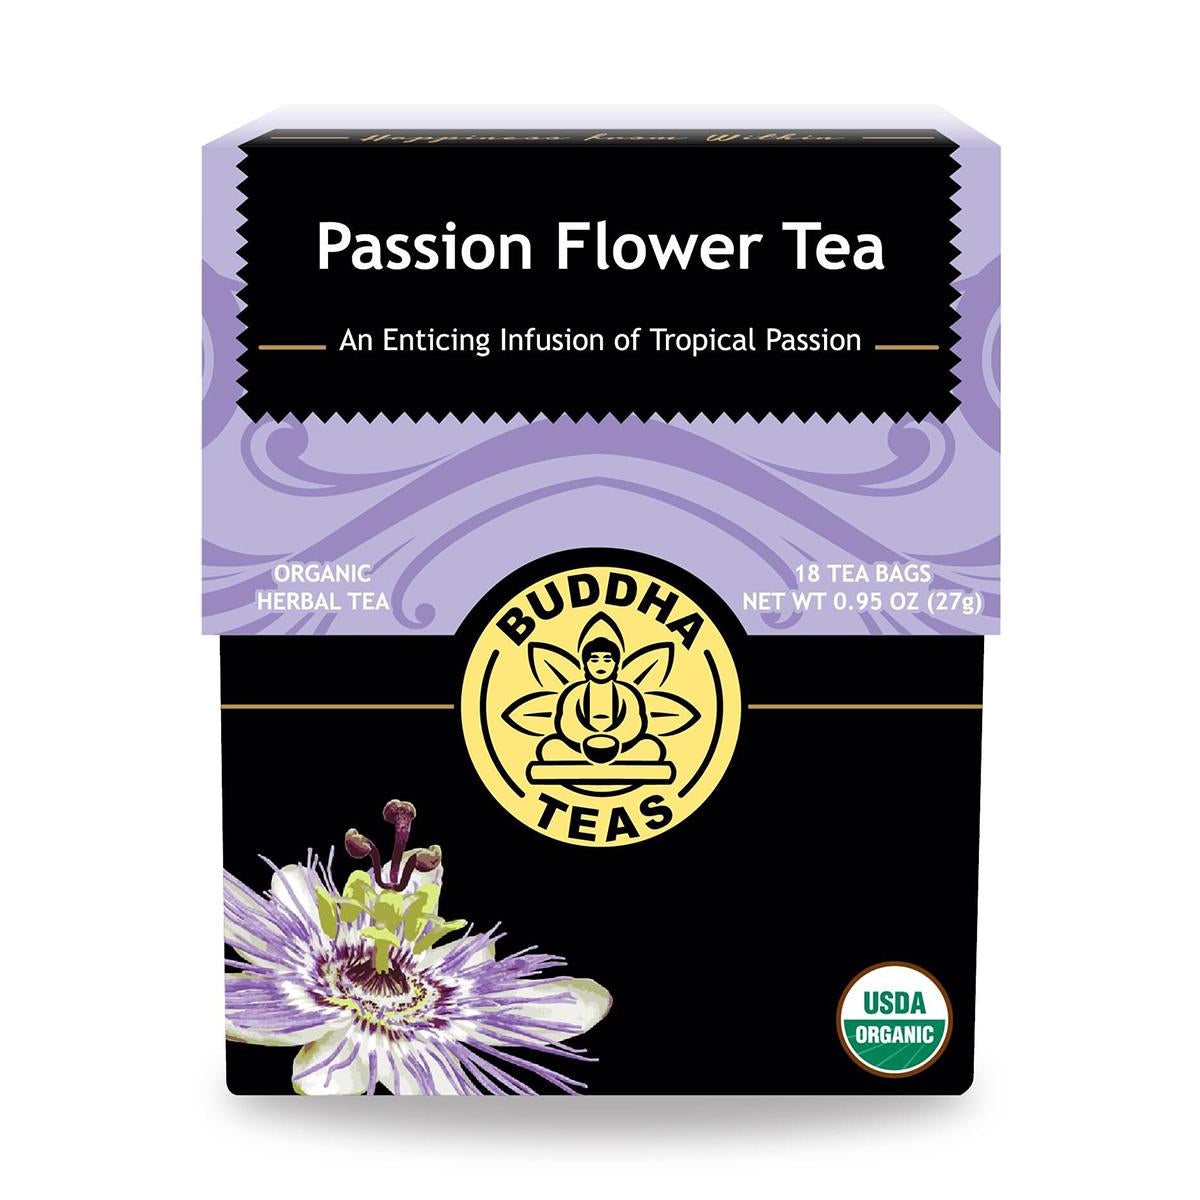 Primary image of Organic Passion Flower Tea